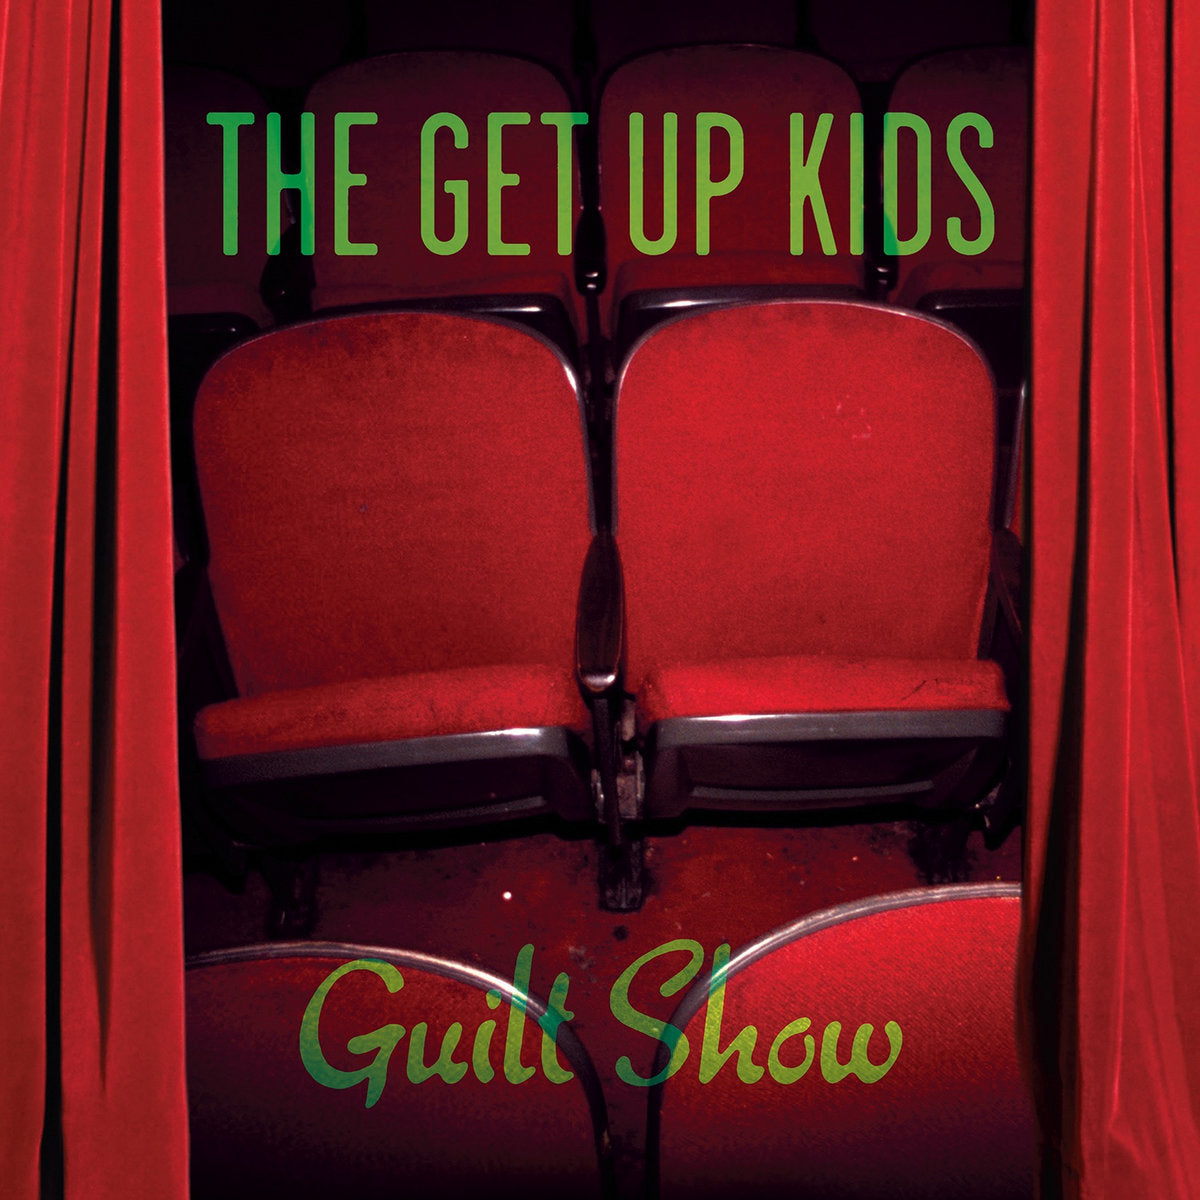 The Get Up Kids "The Guilt Show" 12" Vinyl